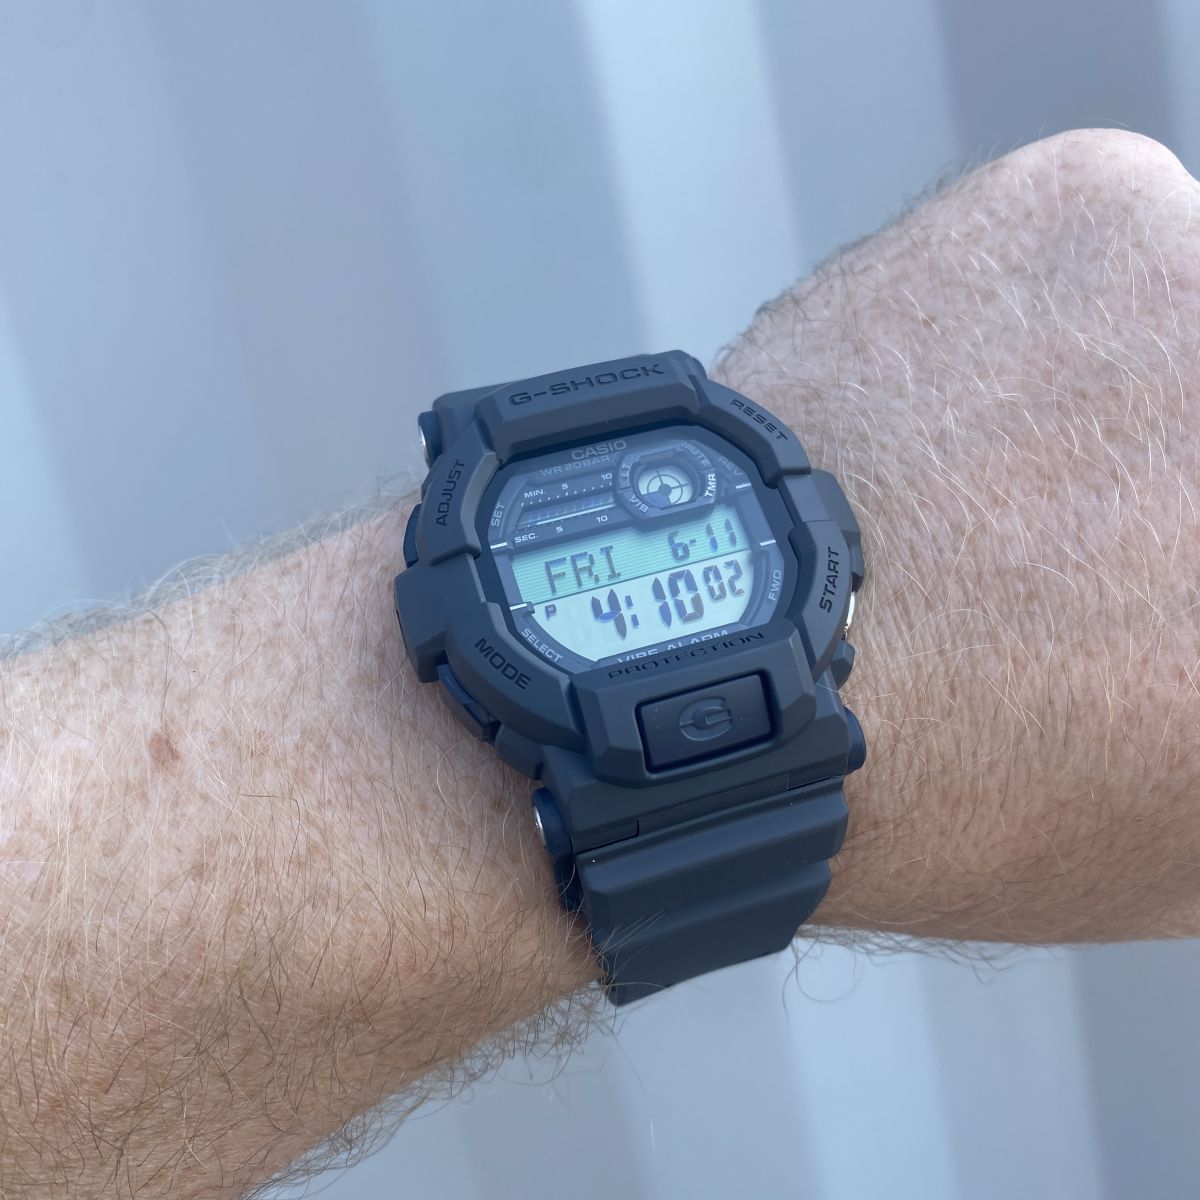 Fk88 Support Vibrating Motor Wristband Fitness Smart Bracelet Band Watches  Sport Smart Watch 4.0 - China Smart Watch and Wristwatch price |  Made-in-China.com